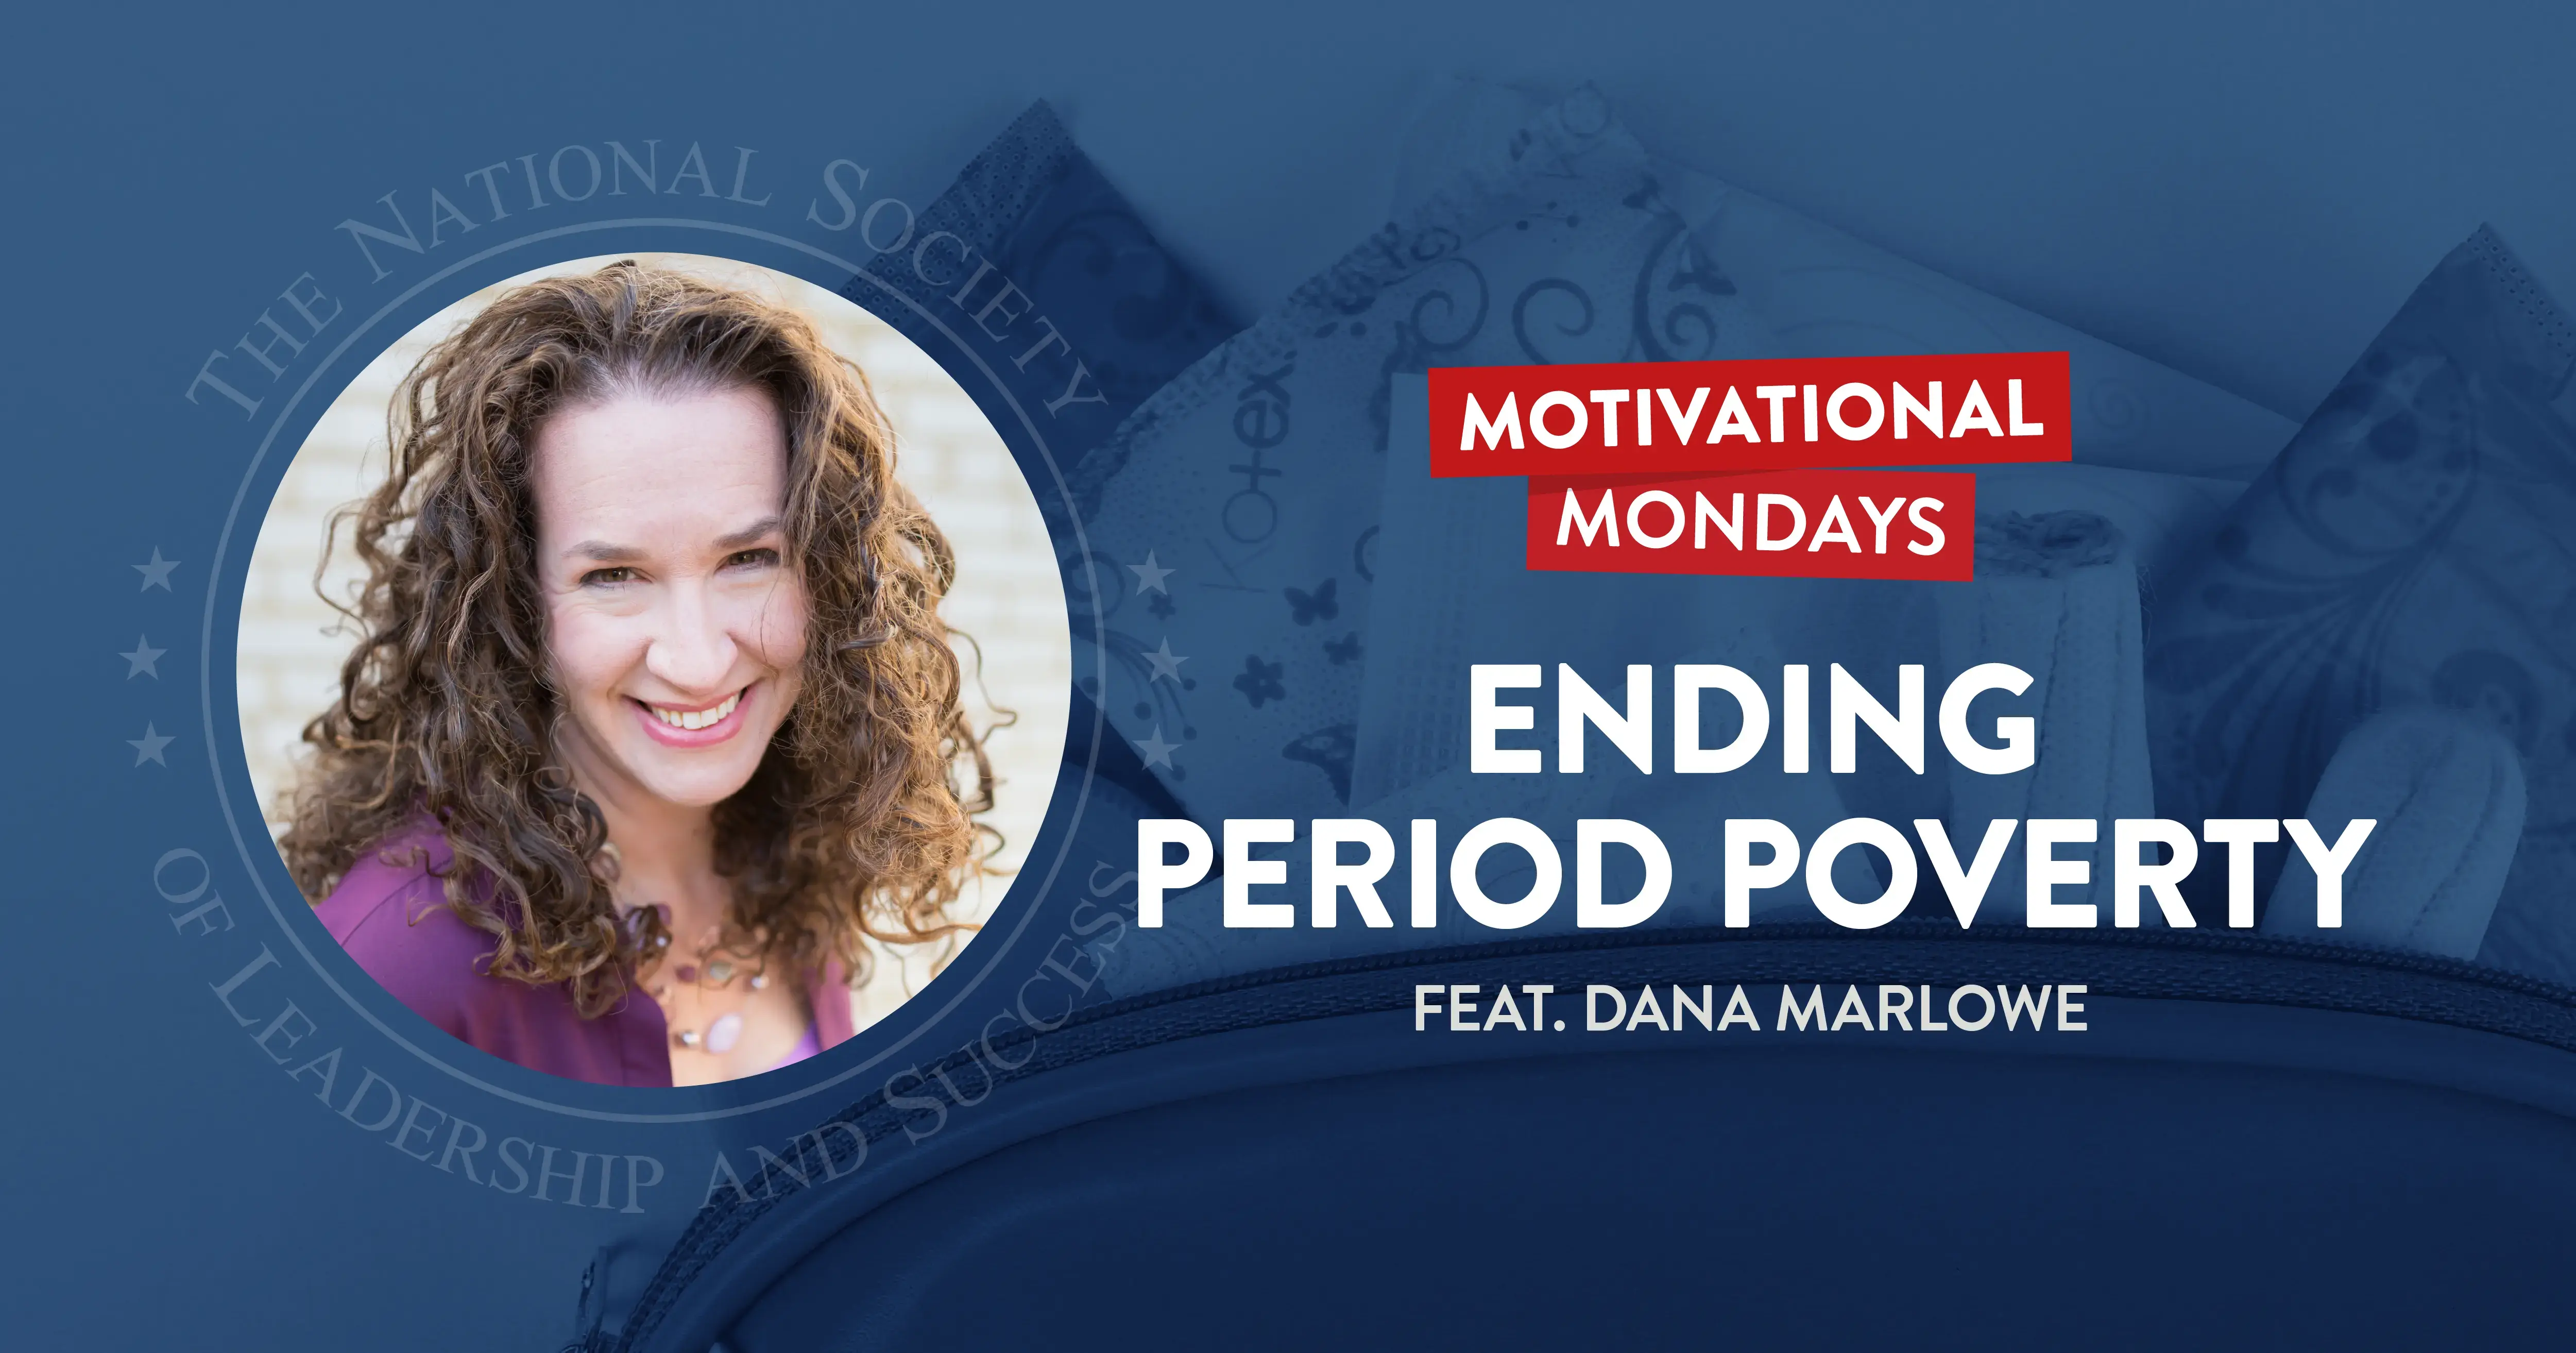 Motivational Mondays: Ending Period Poverty Featuring Dana Marlowe.